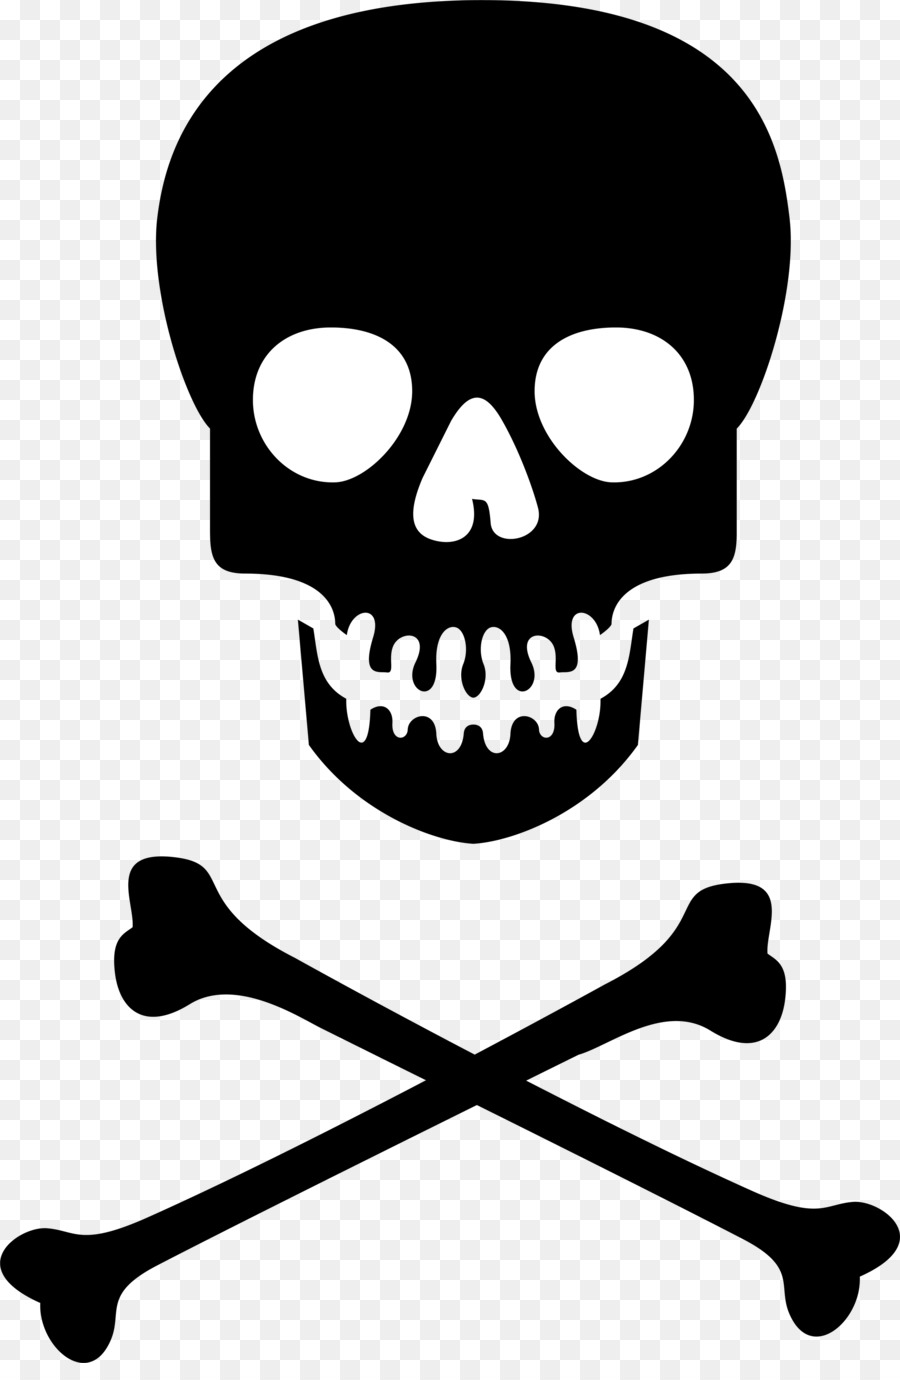 Hazard symbol Skull and crossbones Poison Clip art - Skull And Crossbones PNG Clipart png download - 2400*3635 - Free Transparent Hazard png Download.